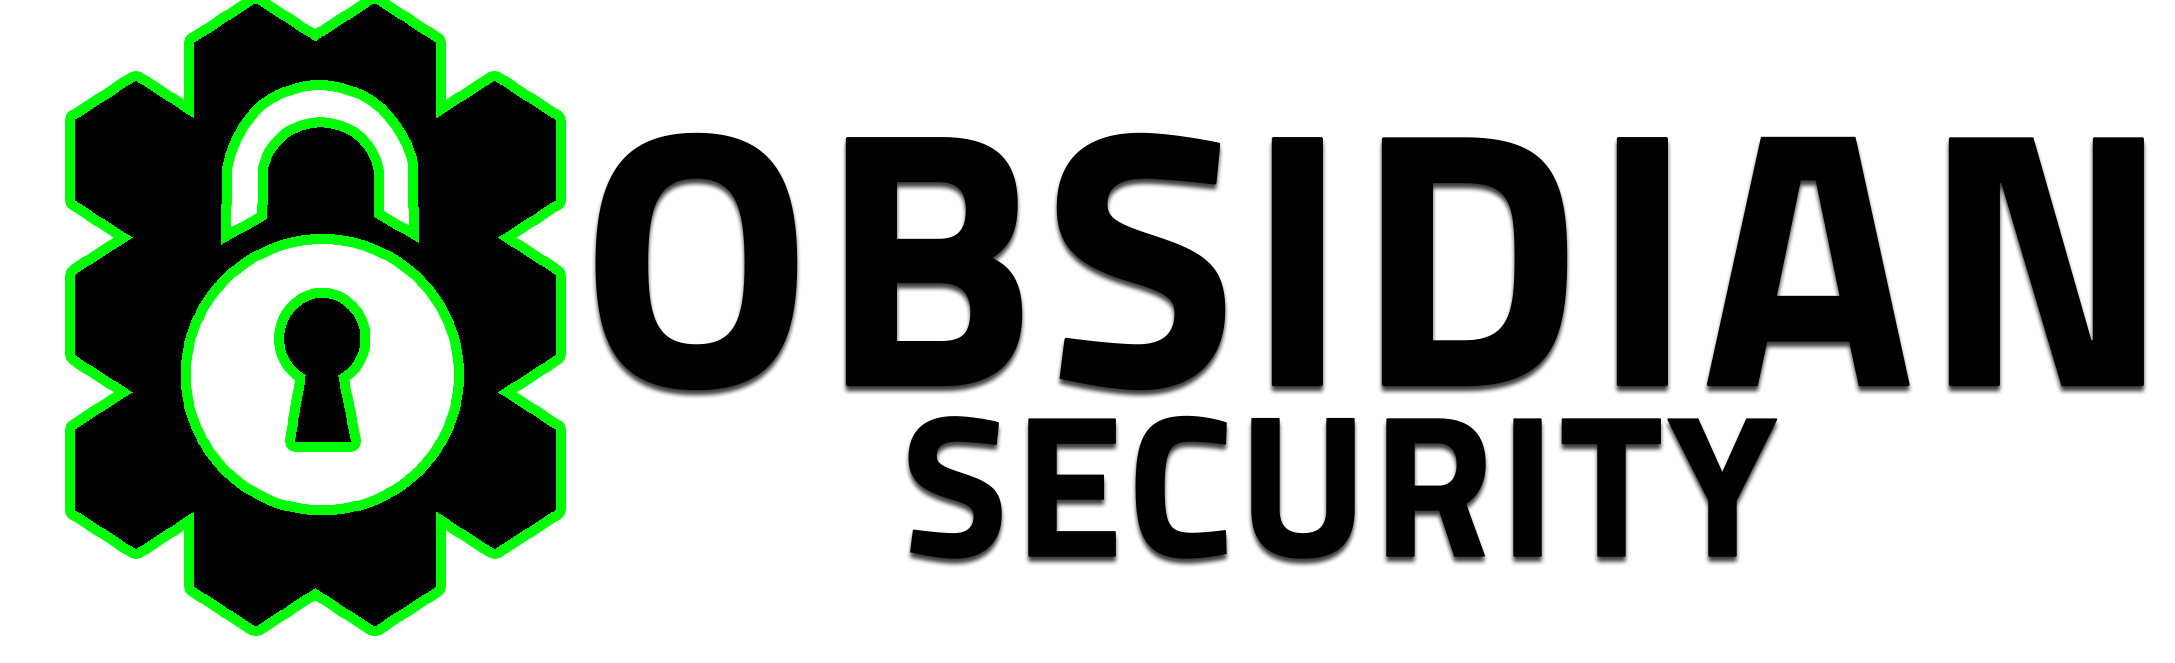 Obsidian Security (s.f.). Obsidian security. Recuperado de: http://obsidian-security.com.mx/